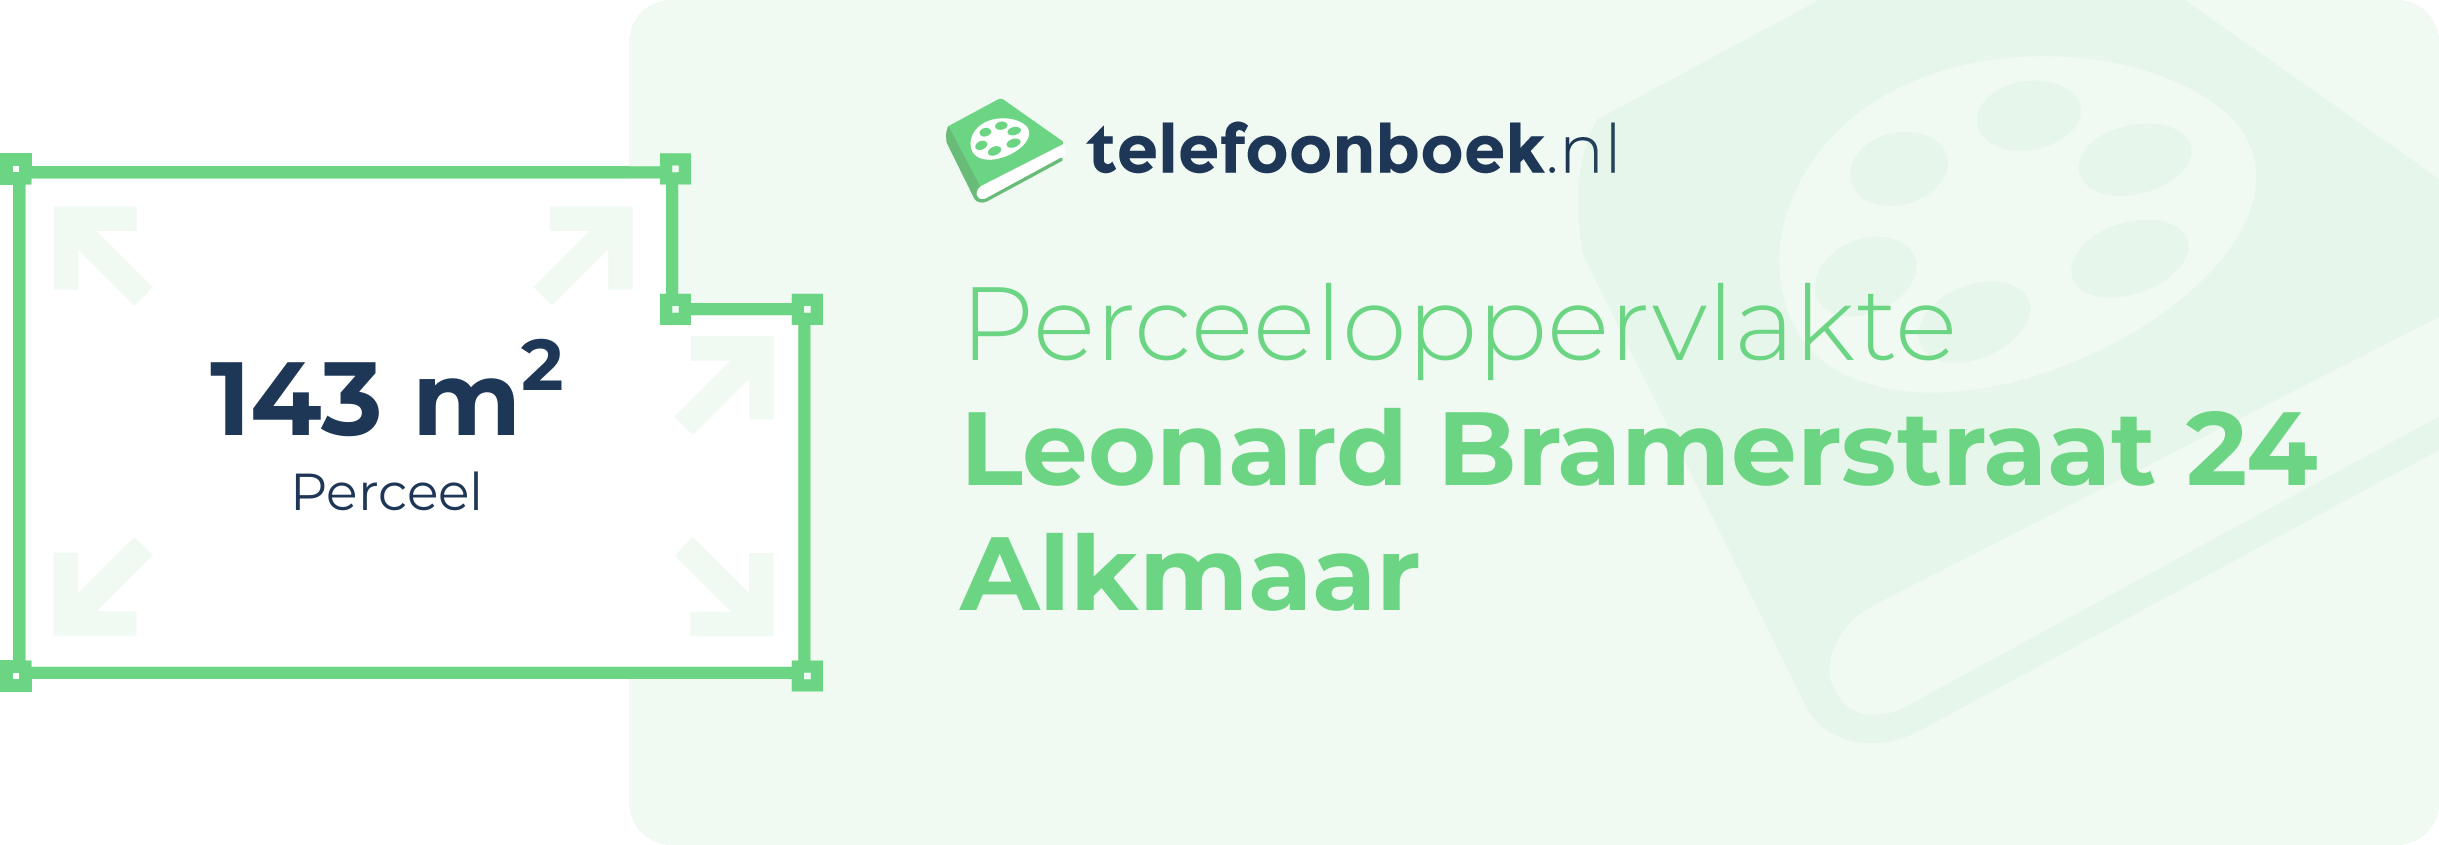 Perceeloppervlakte Leonard Bramerstraat 24 Alkmaar